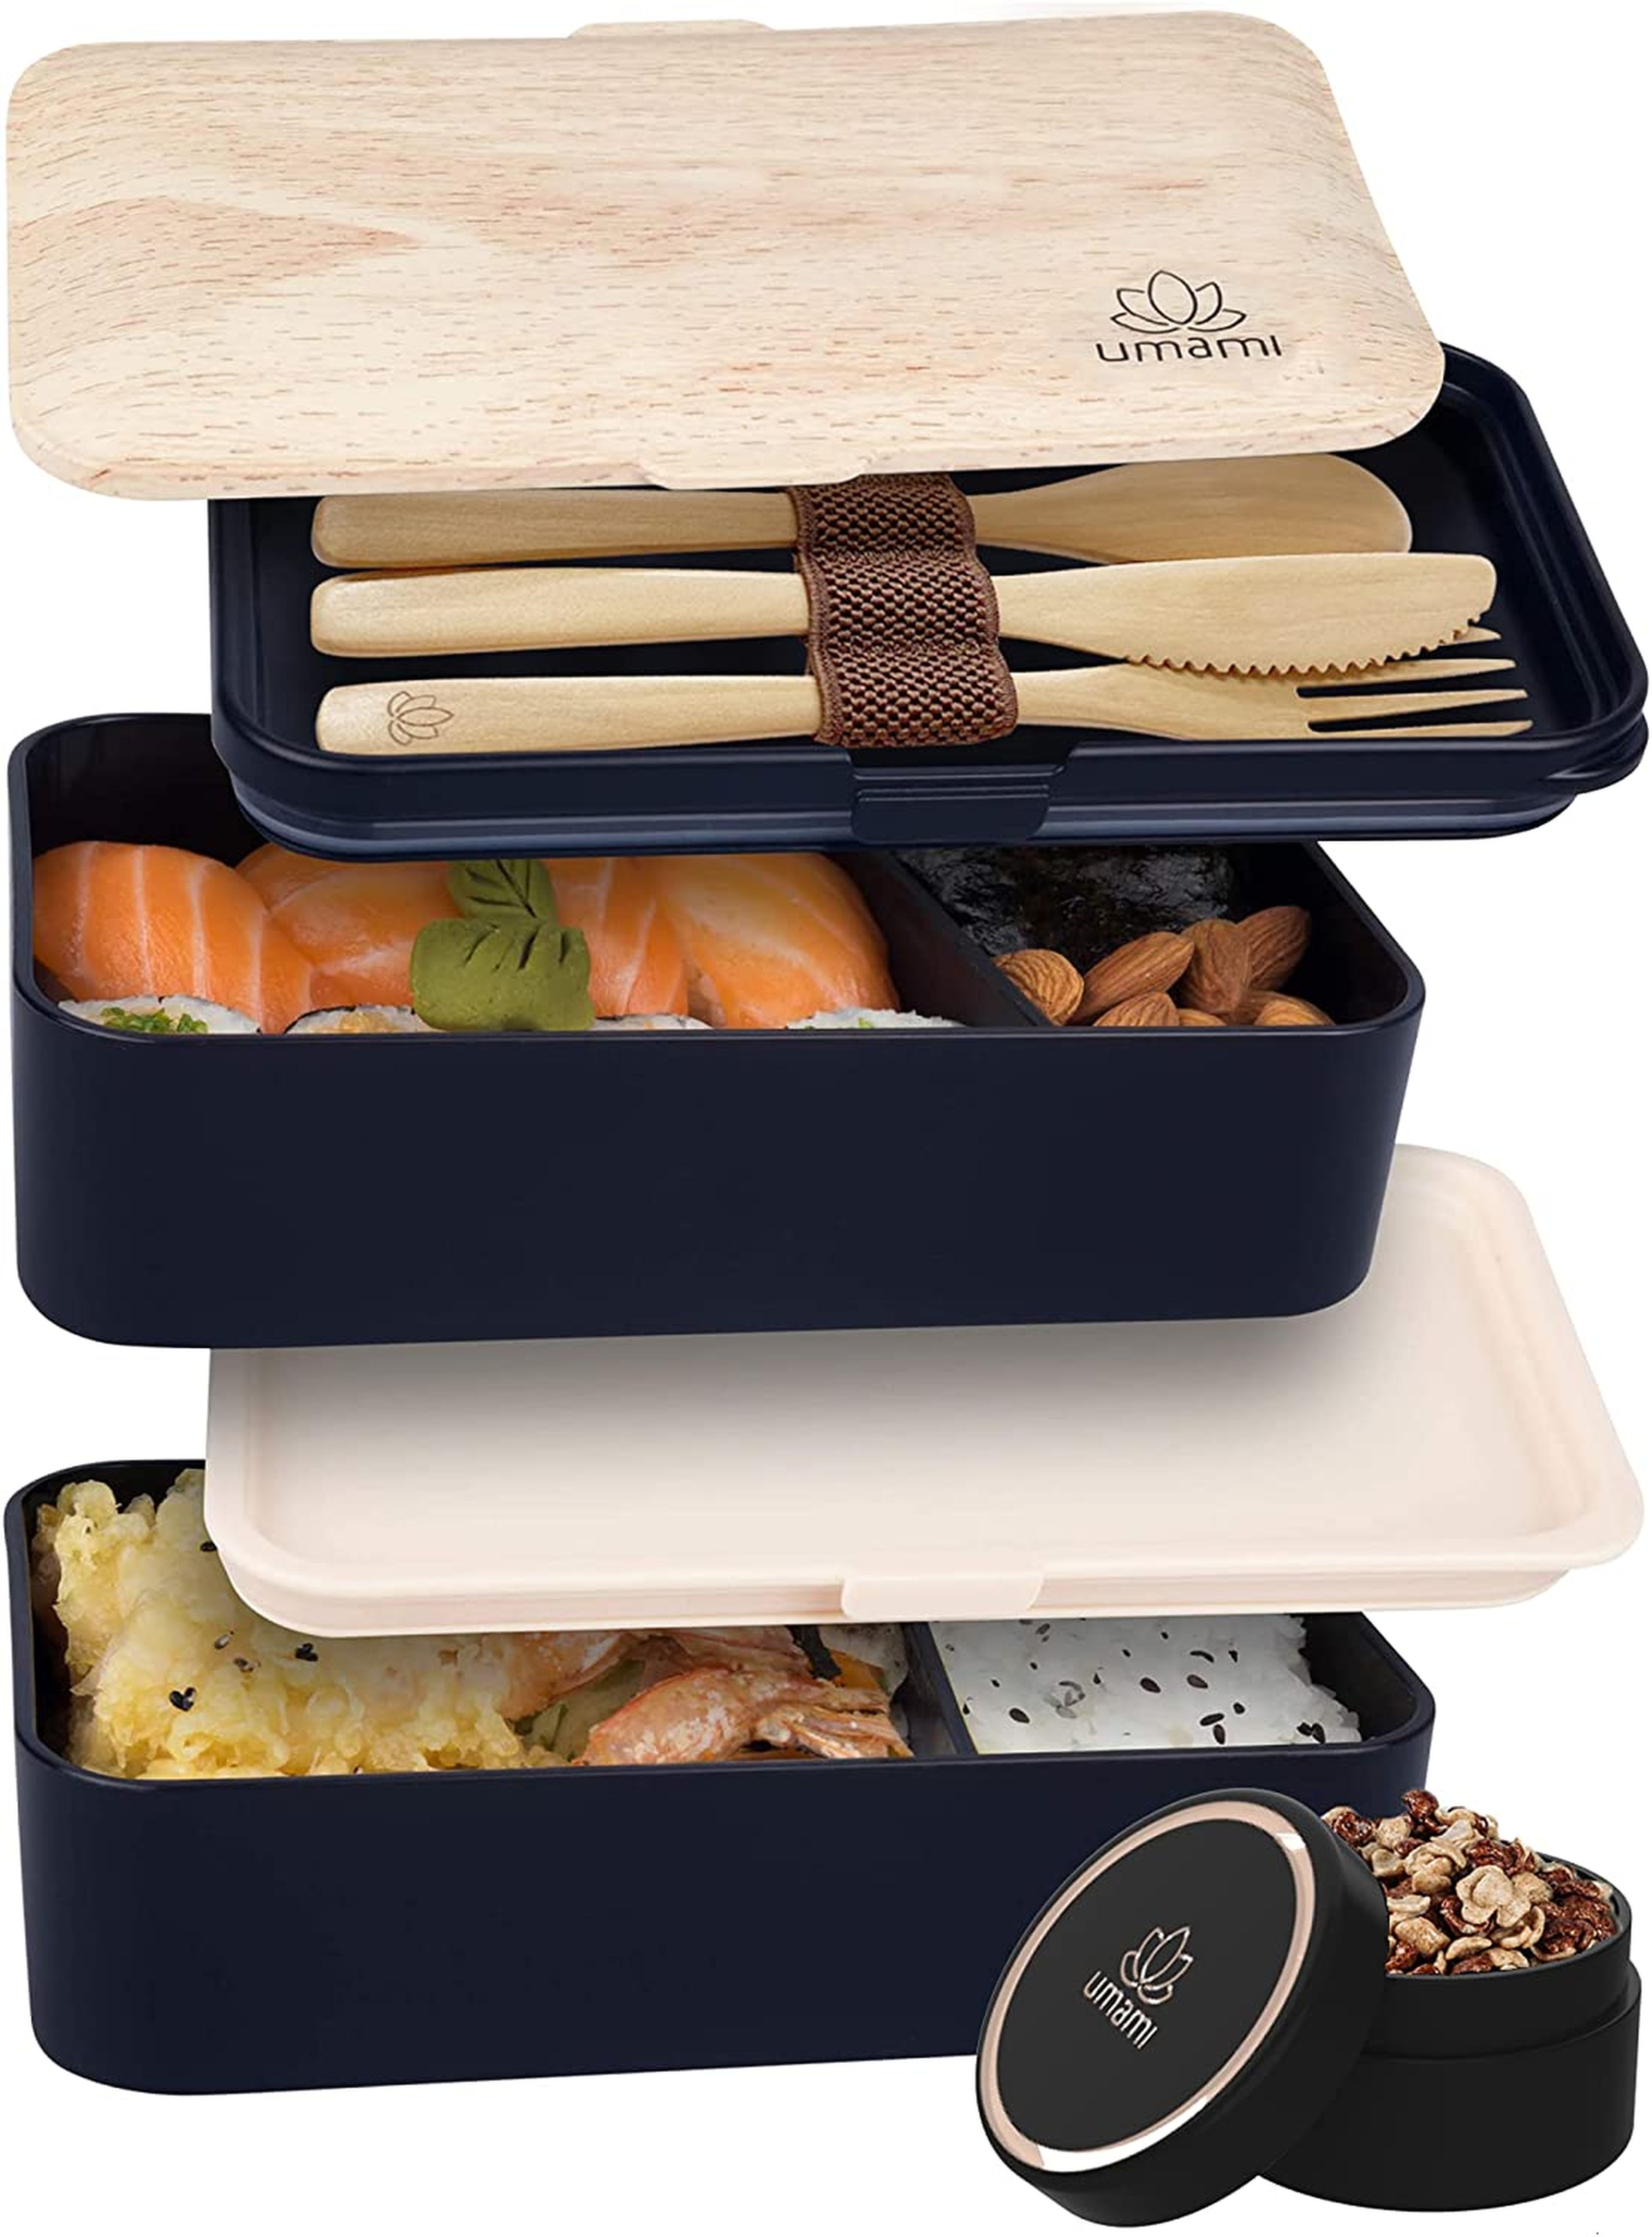 Umami Bento Lunch Box